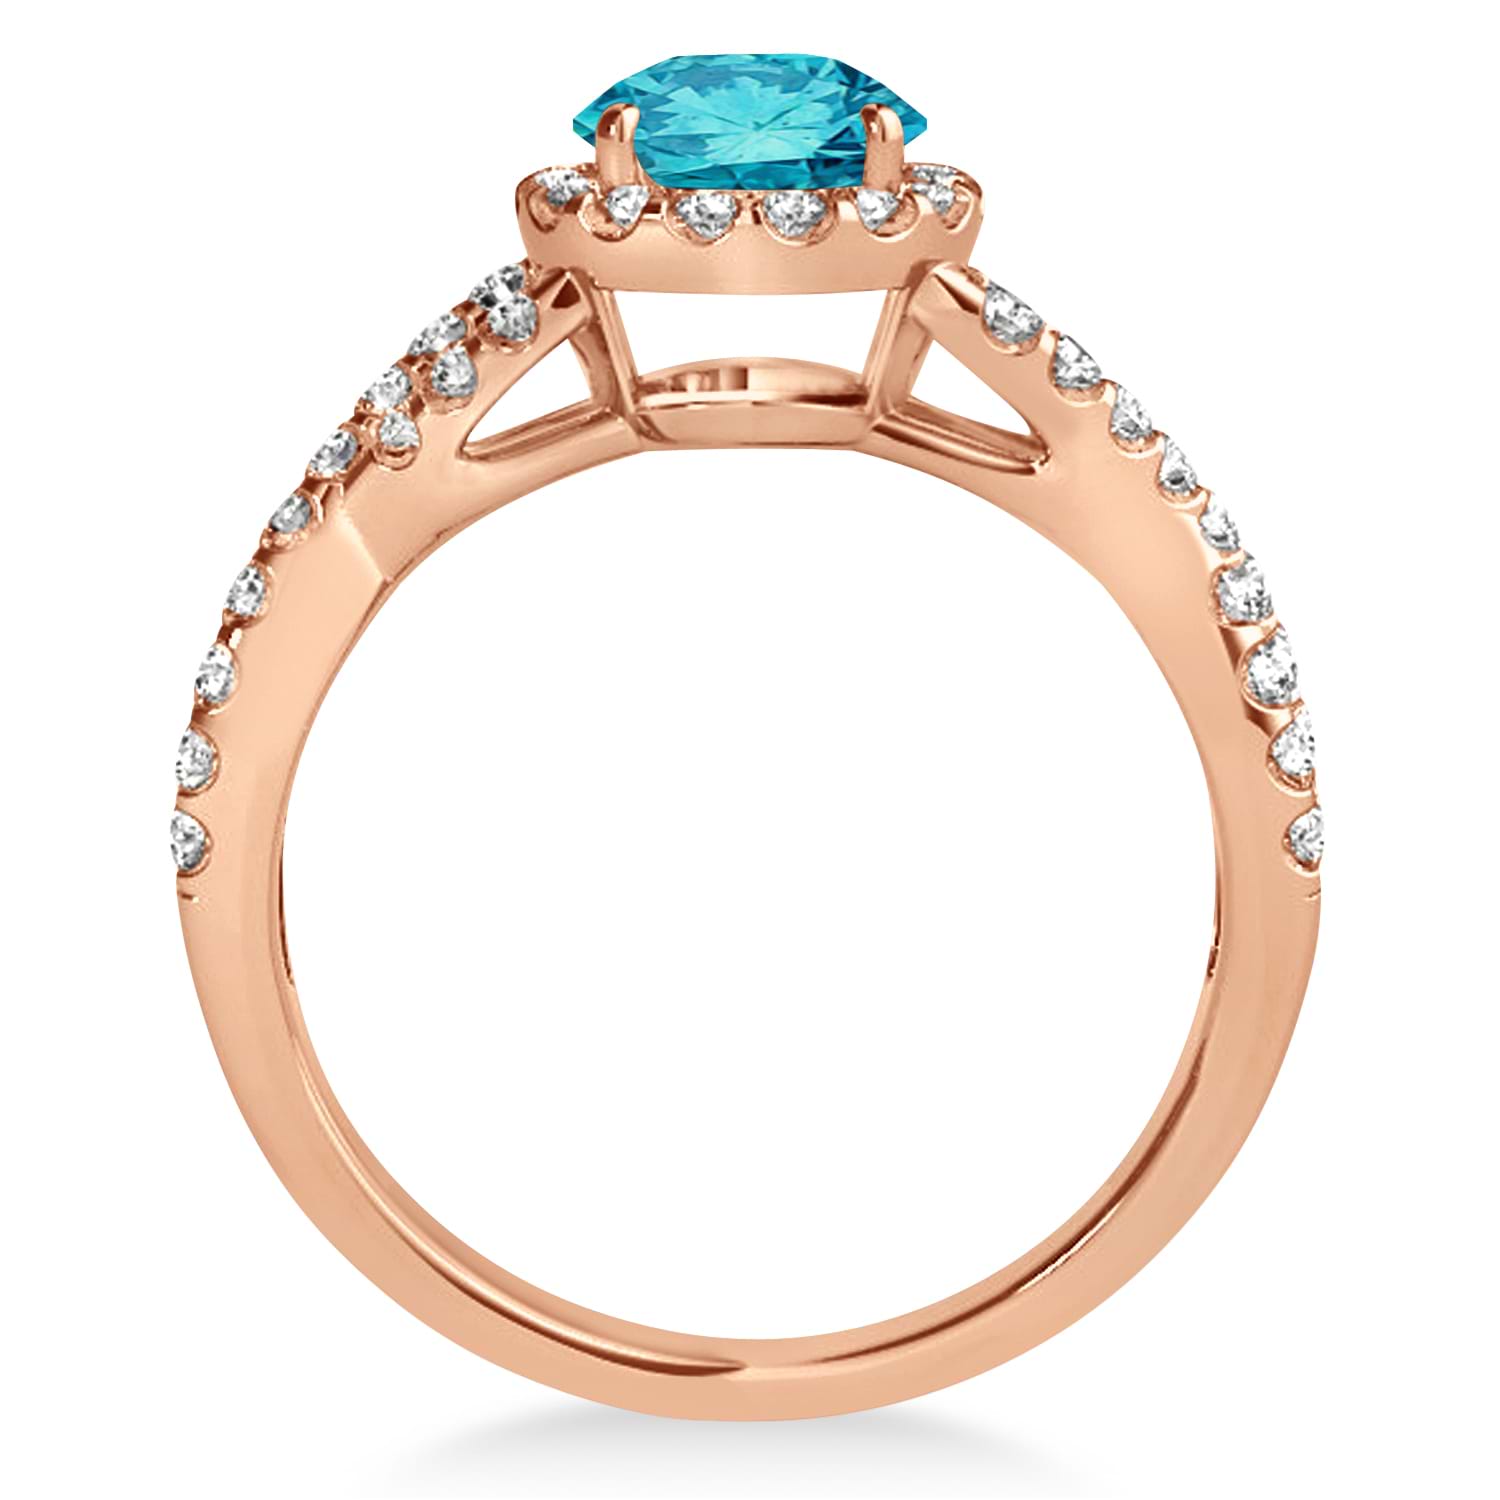 Blue Diamond & Diamond Twisted Engagement Ring 14k Rose Gold 1.30ct